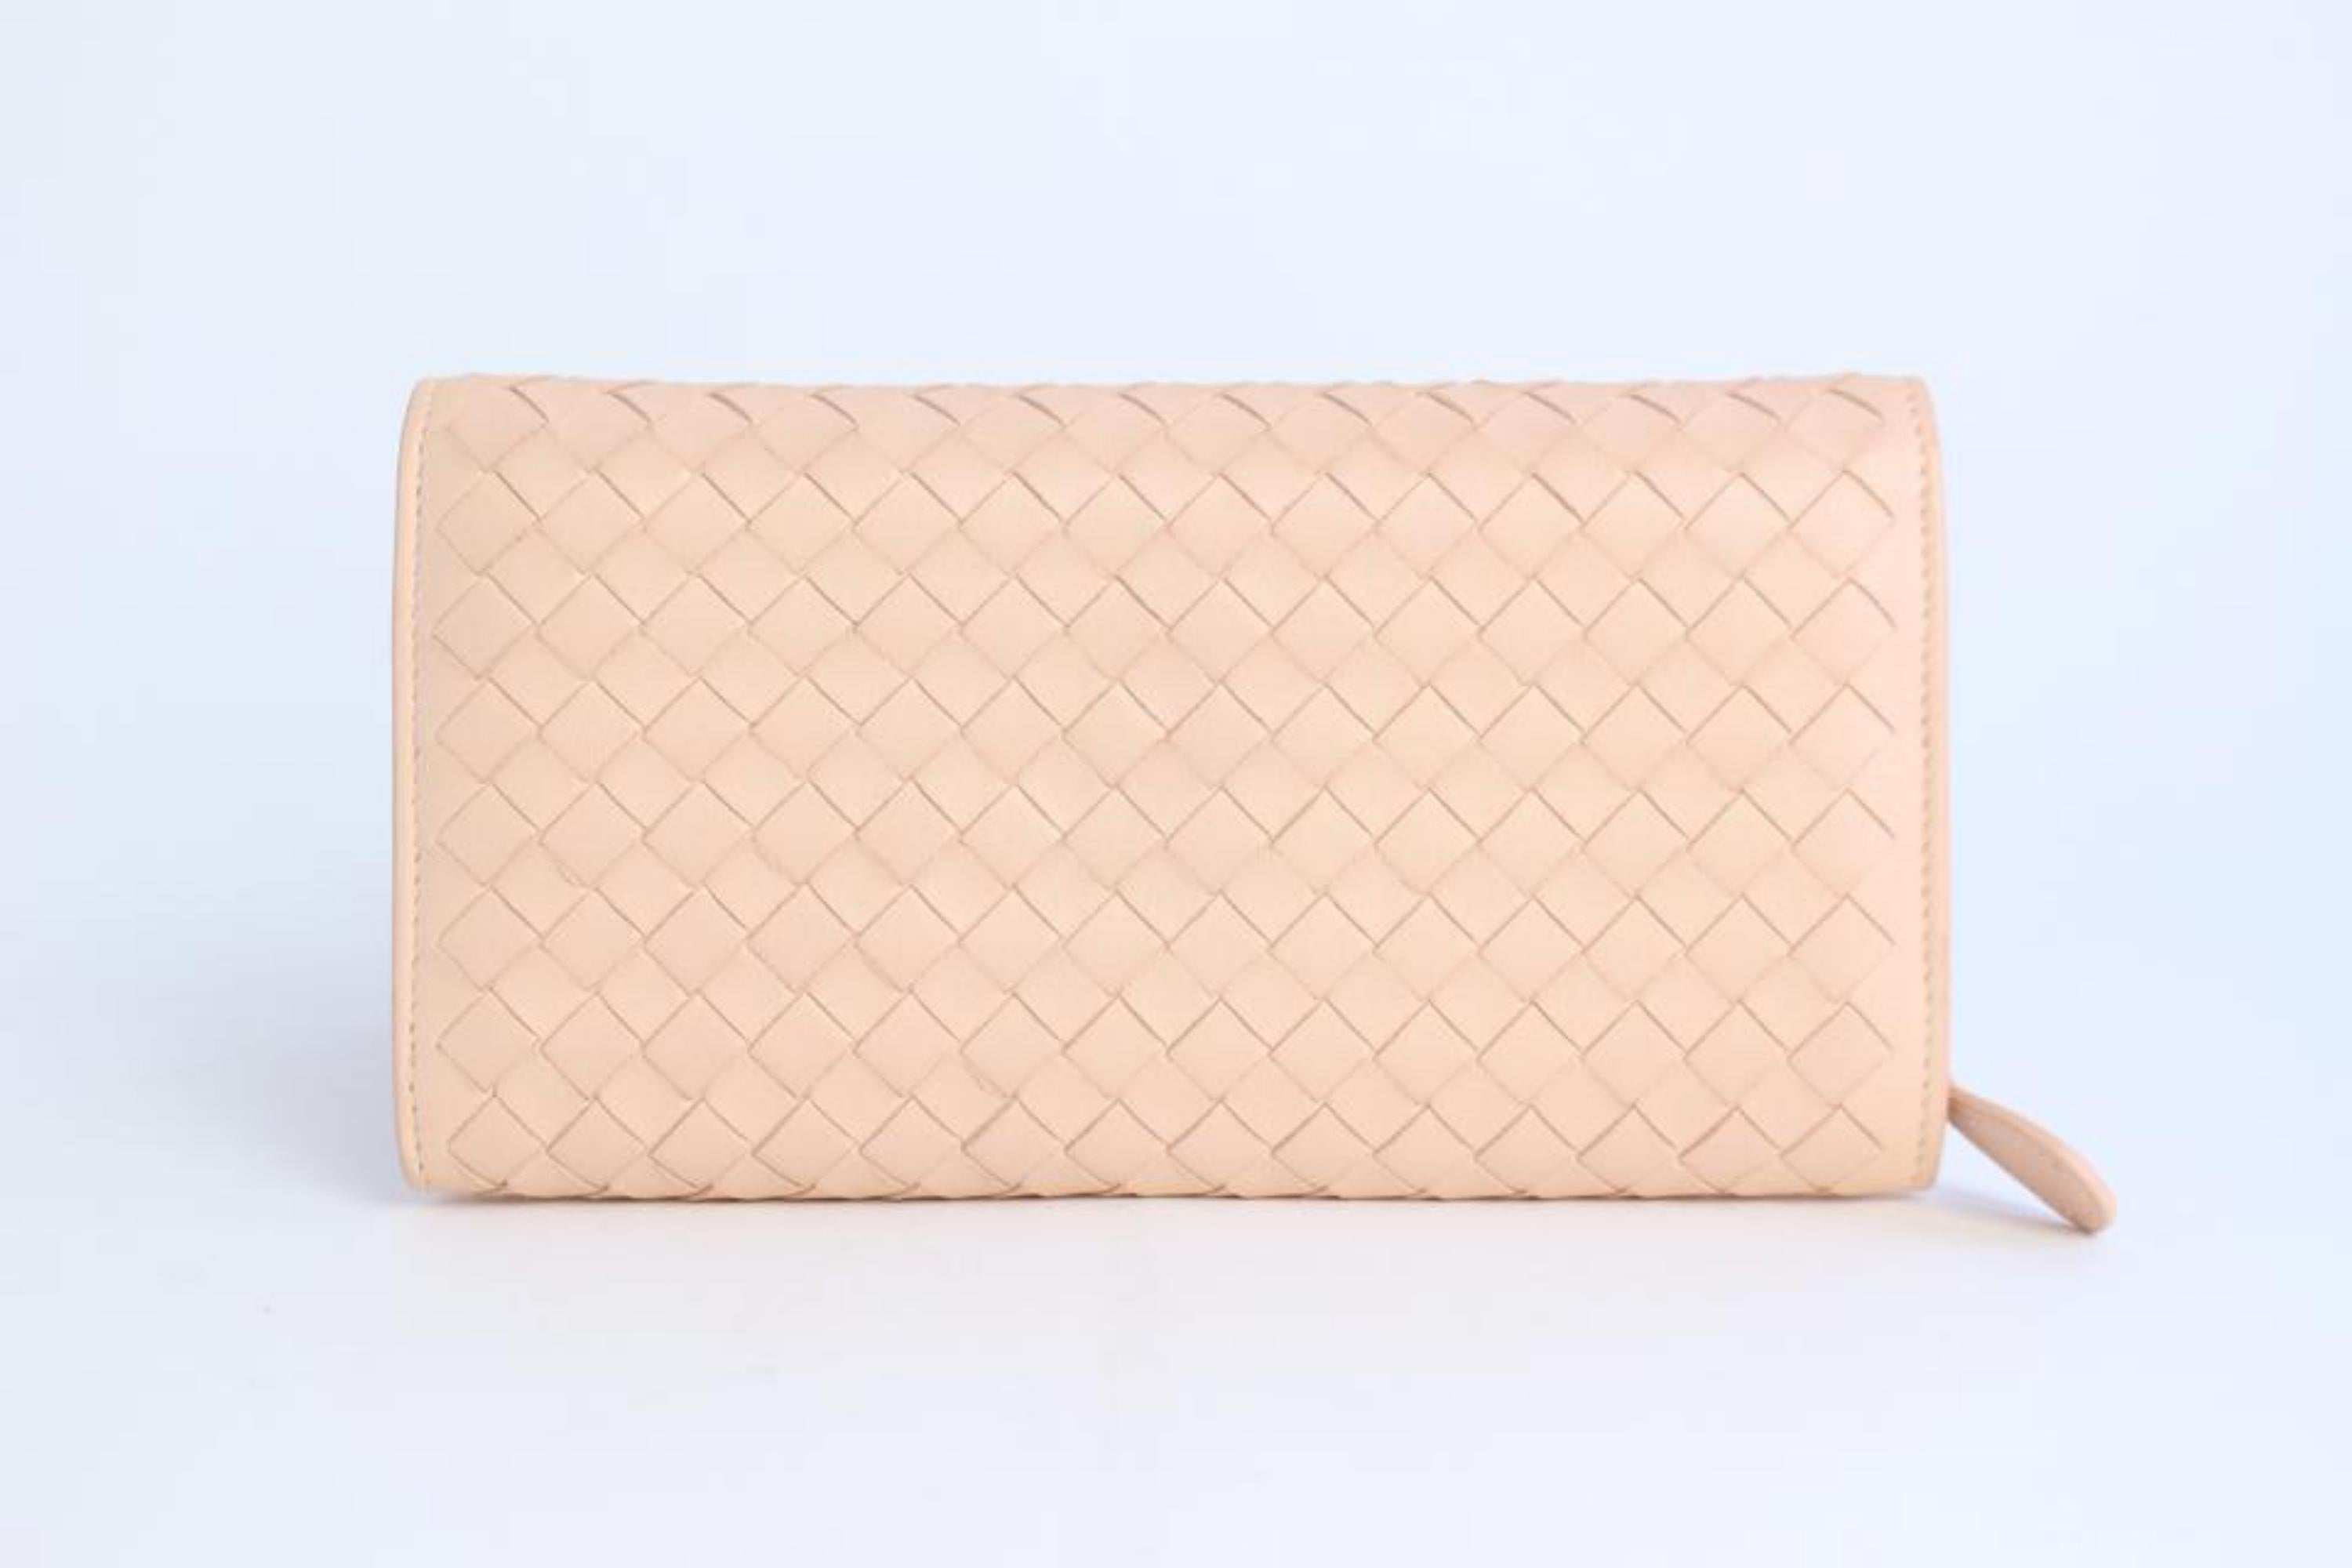 Bottega Veneta Fold-over Flap Wallet 5mz0828 Pink Leather Clutch For Sale 3